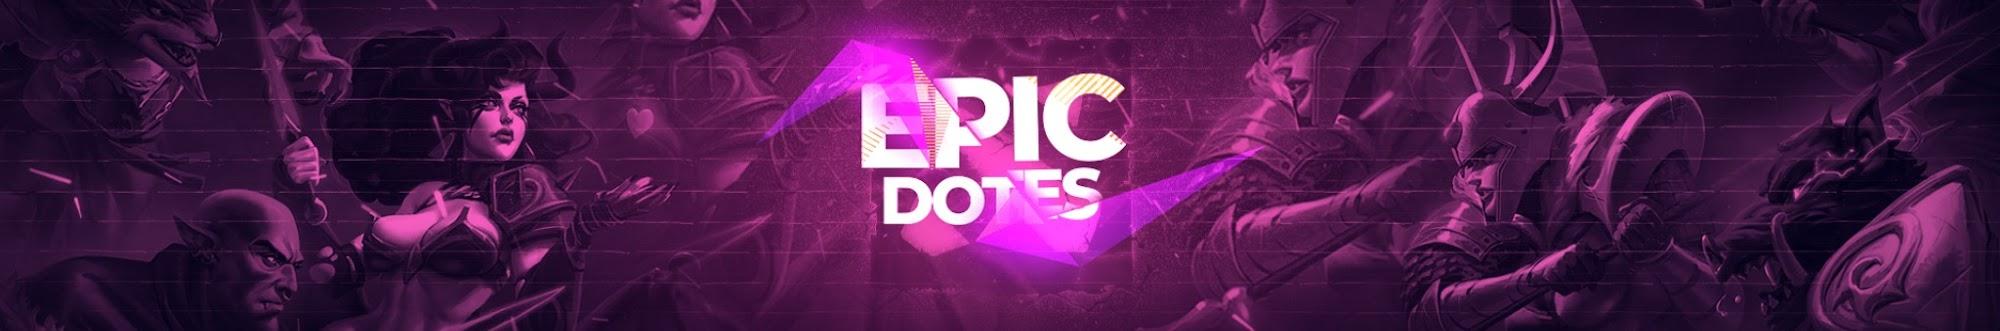 Epic Dotes